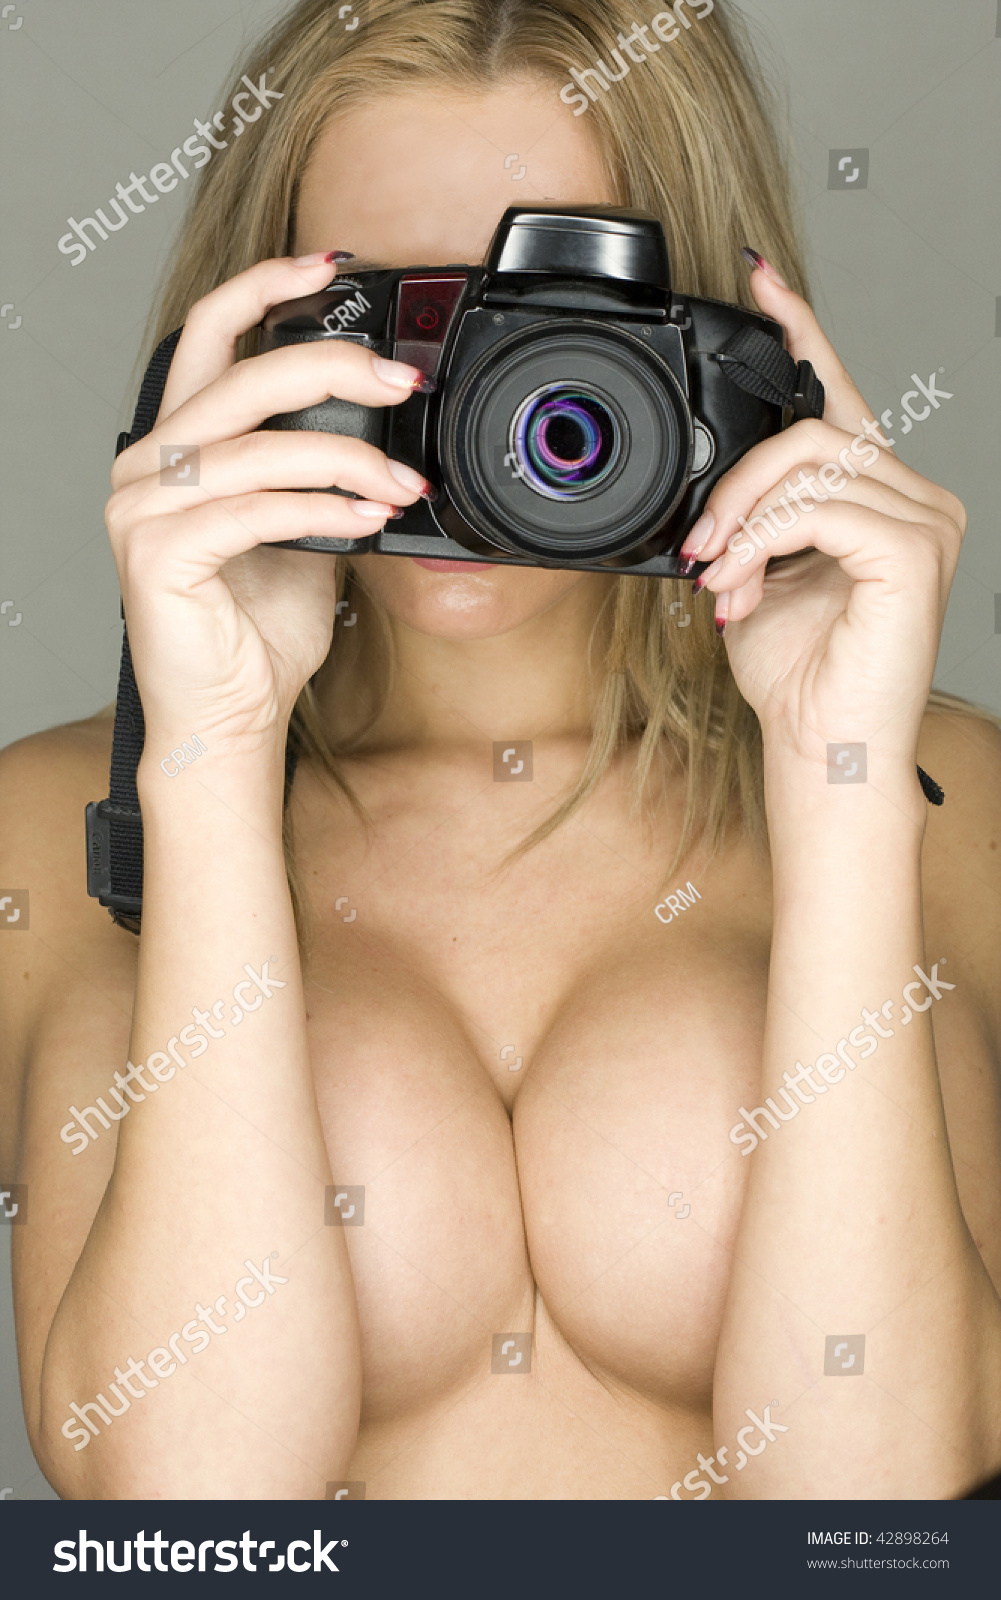 Cam sexy nude Крошки: красивые